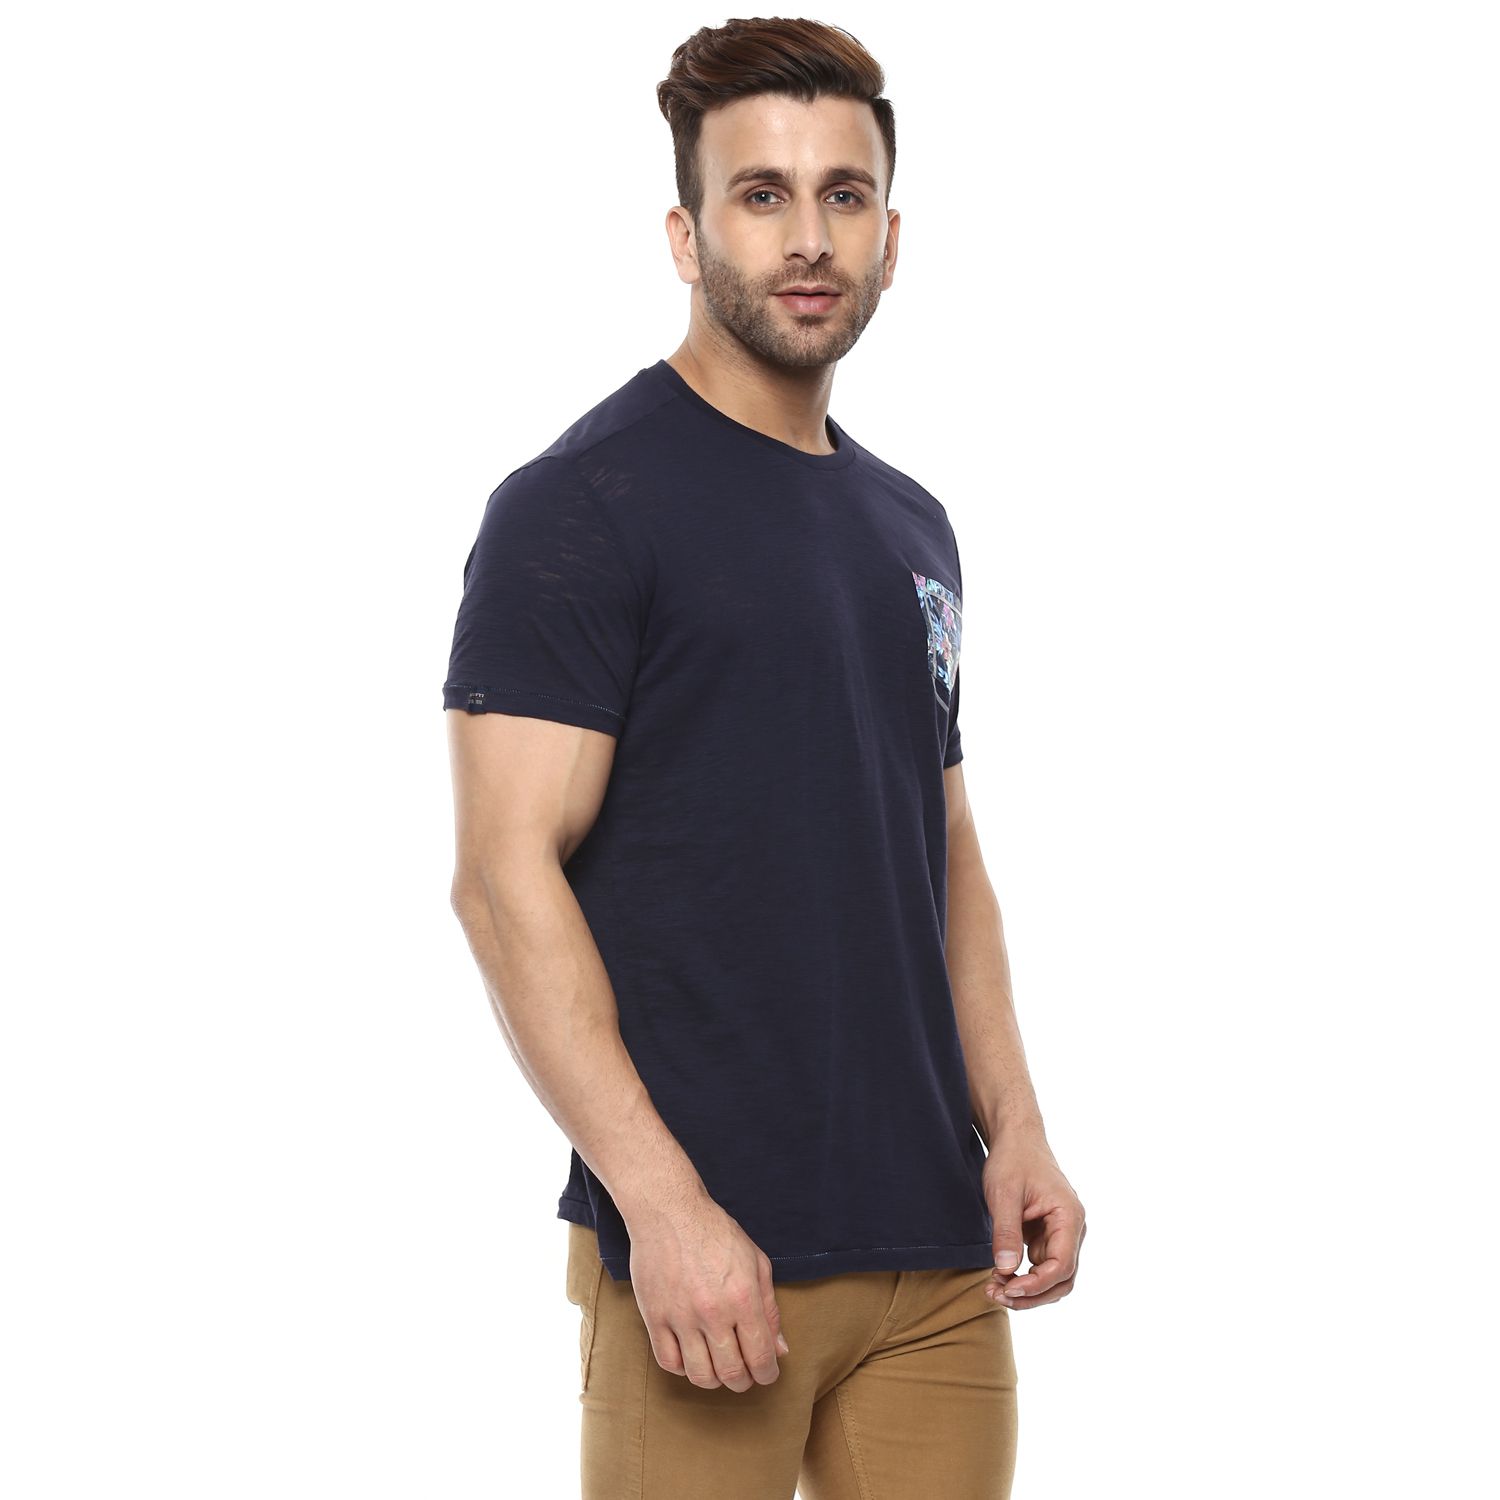 Mufti Navy Round T-Shirt - Buy Mufti Navy Round T-Shirt Online at Low ...